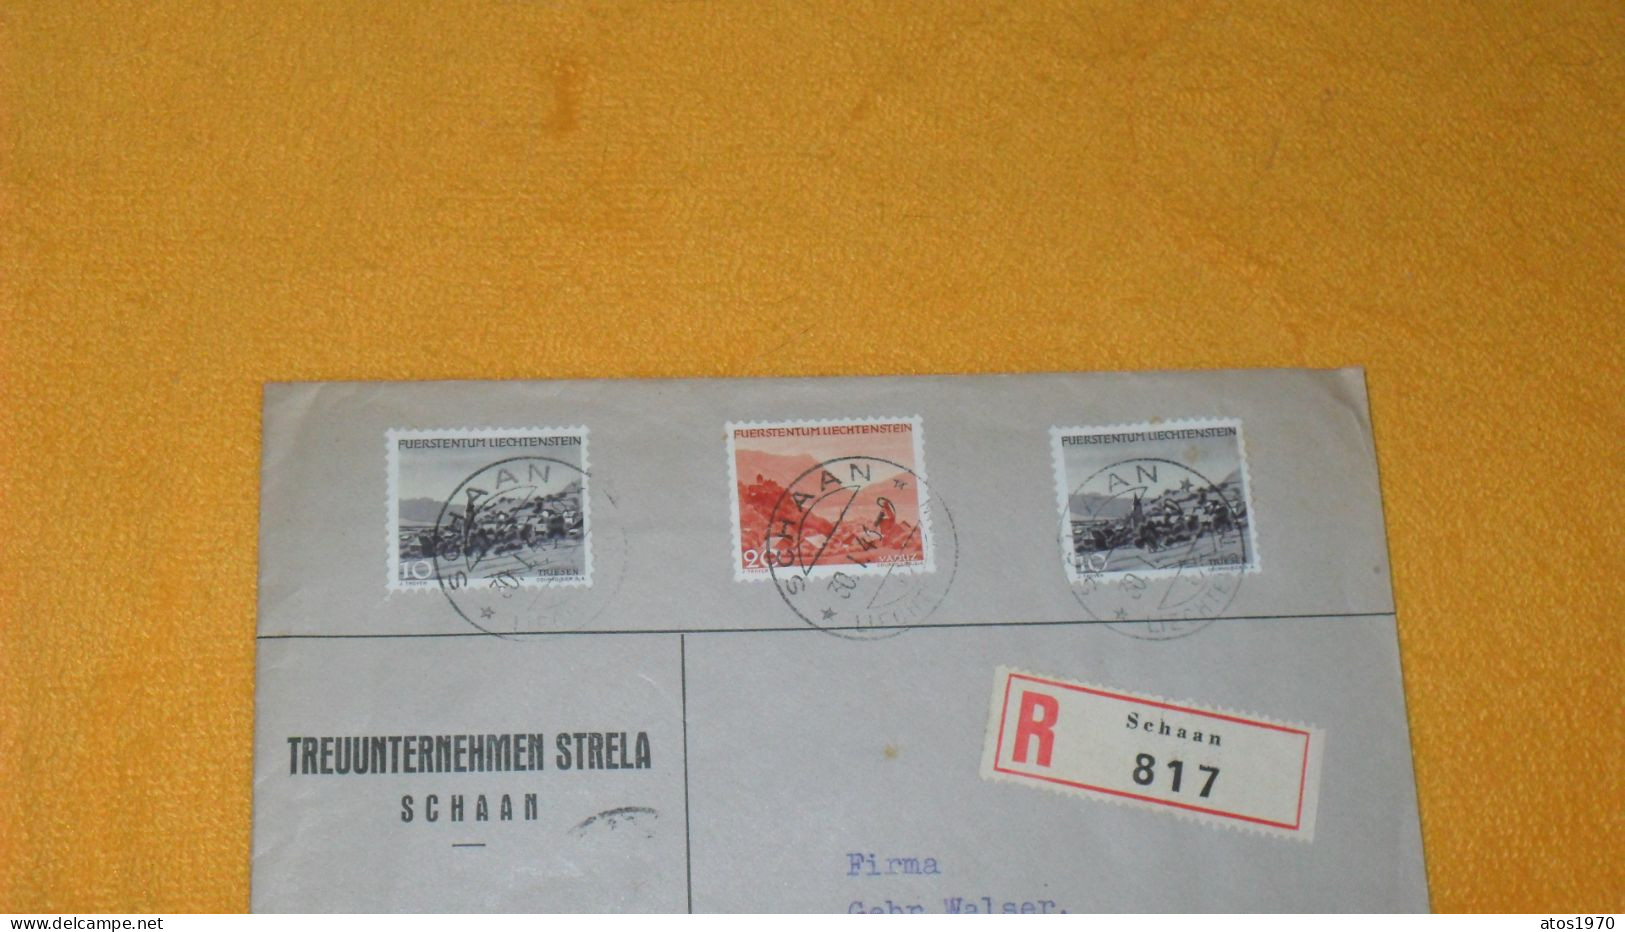 ENVELOPPE ANCIENNE DE 1946../ TREUUNTERNEHMEN STRELA SCHAAN..R 817 SCHAAN POUR ST. GALLEN BRUGGEN + TIMBRES X3 - Covers & Documents